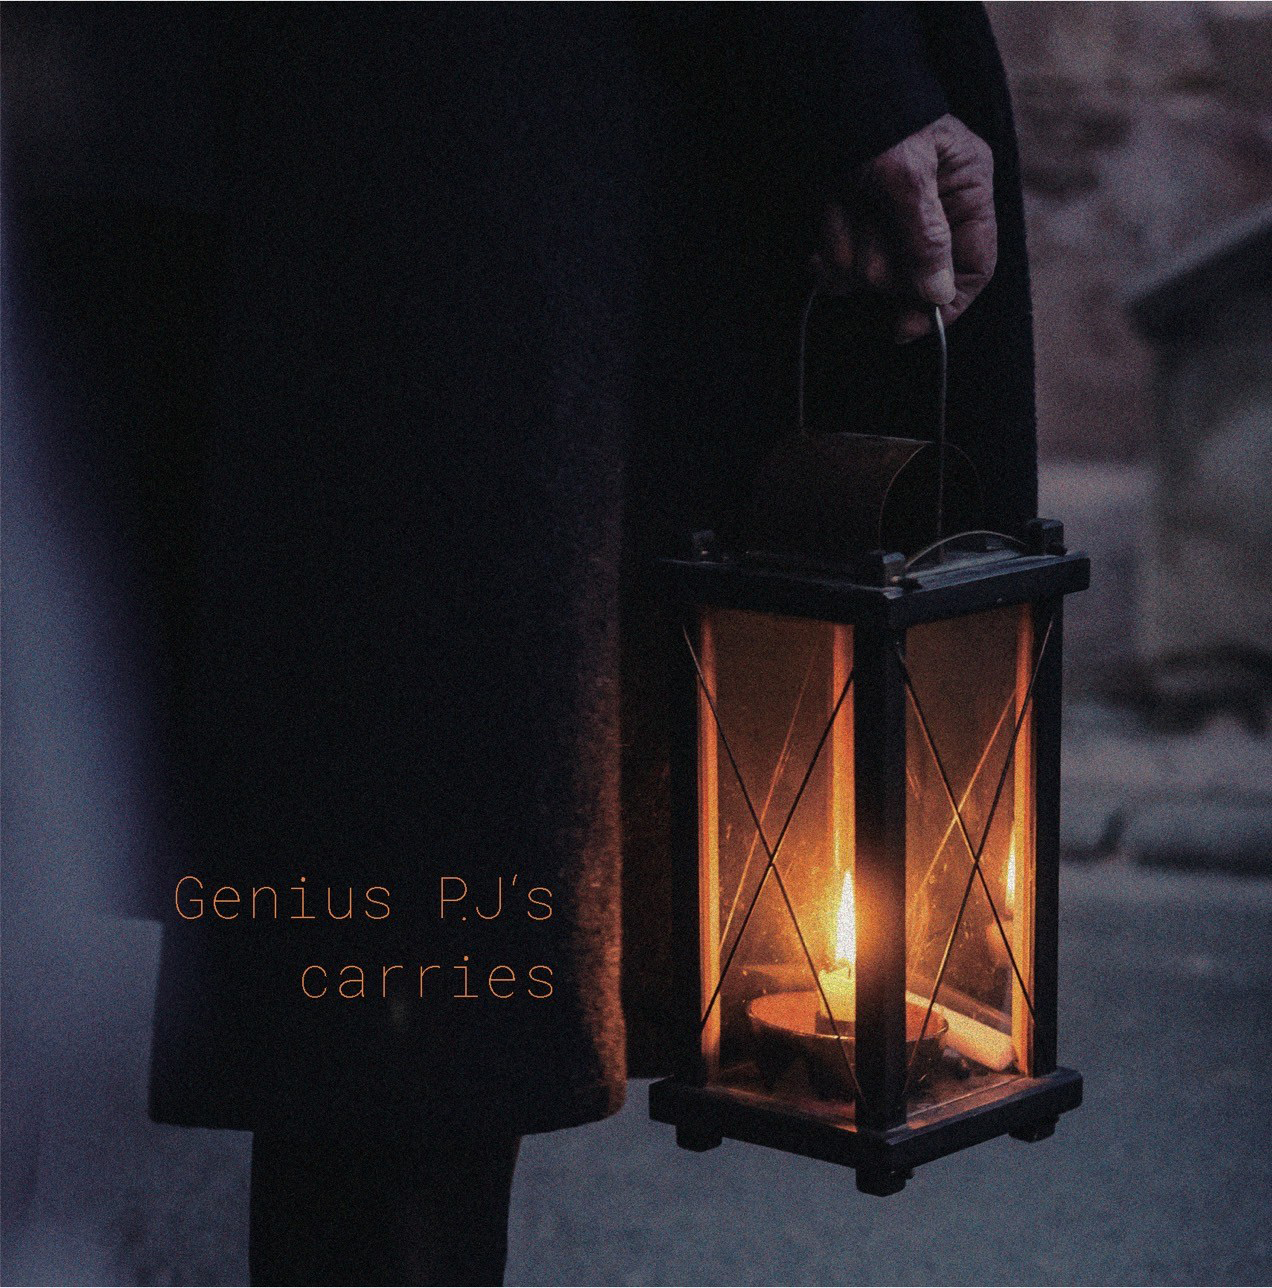 Genius P.J's 'carries'